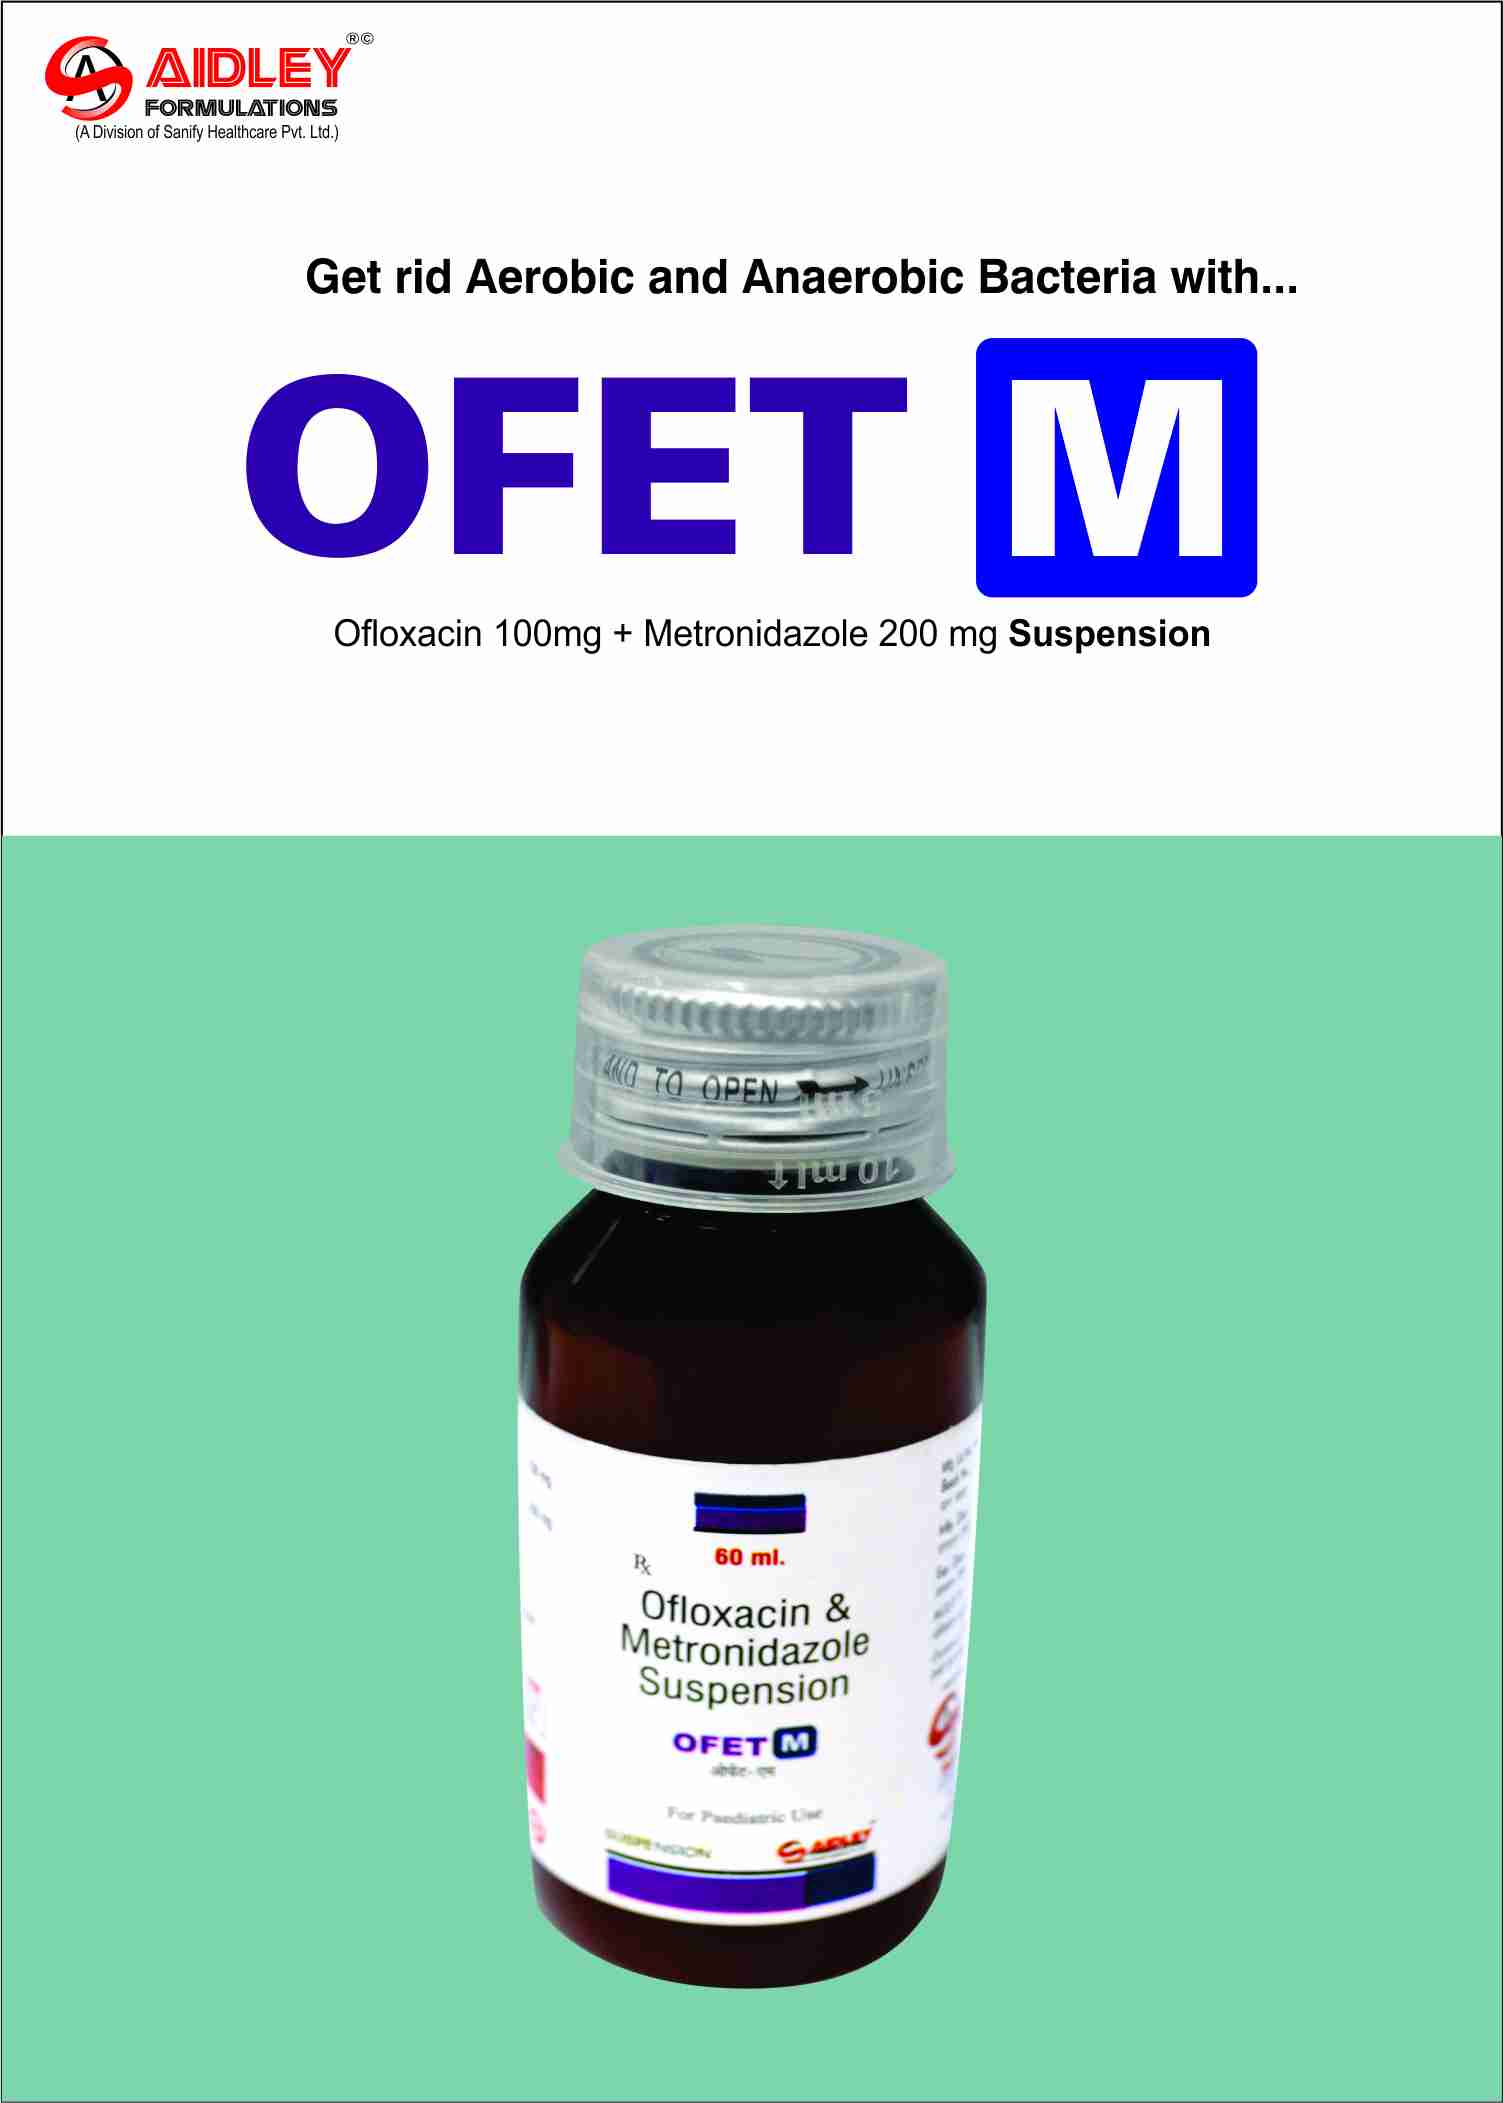 Ofloxacin 100mg and Metronidazole 200mg Suspension